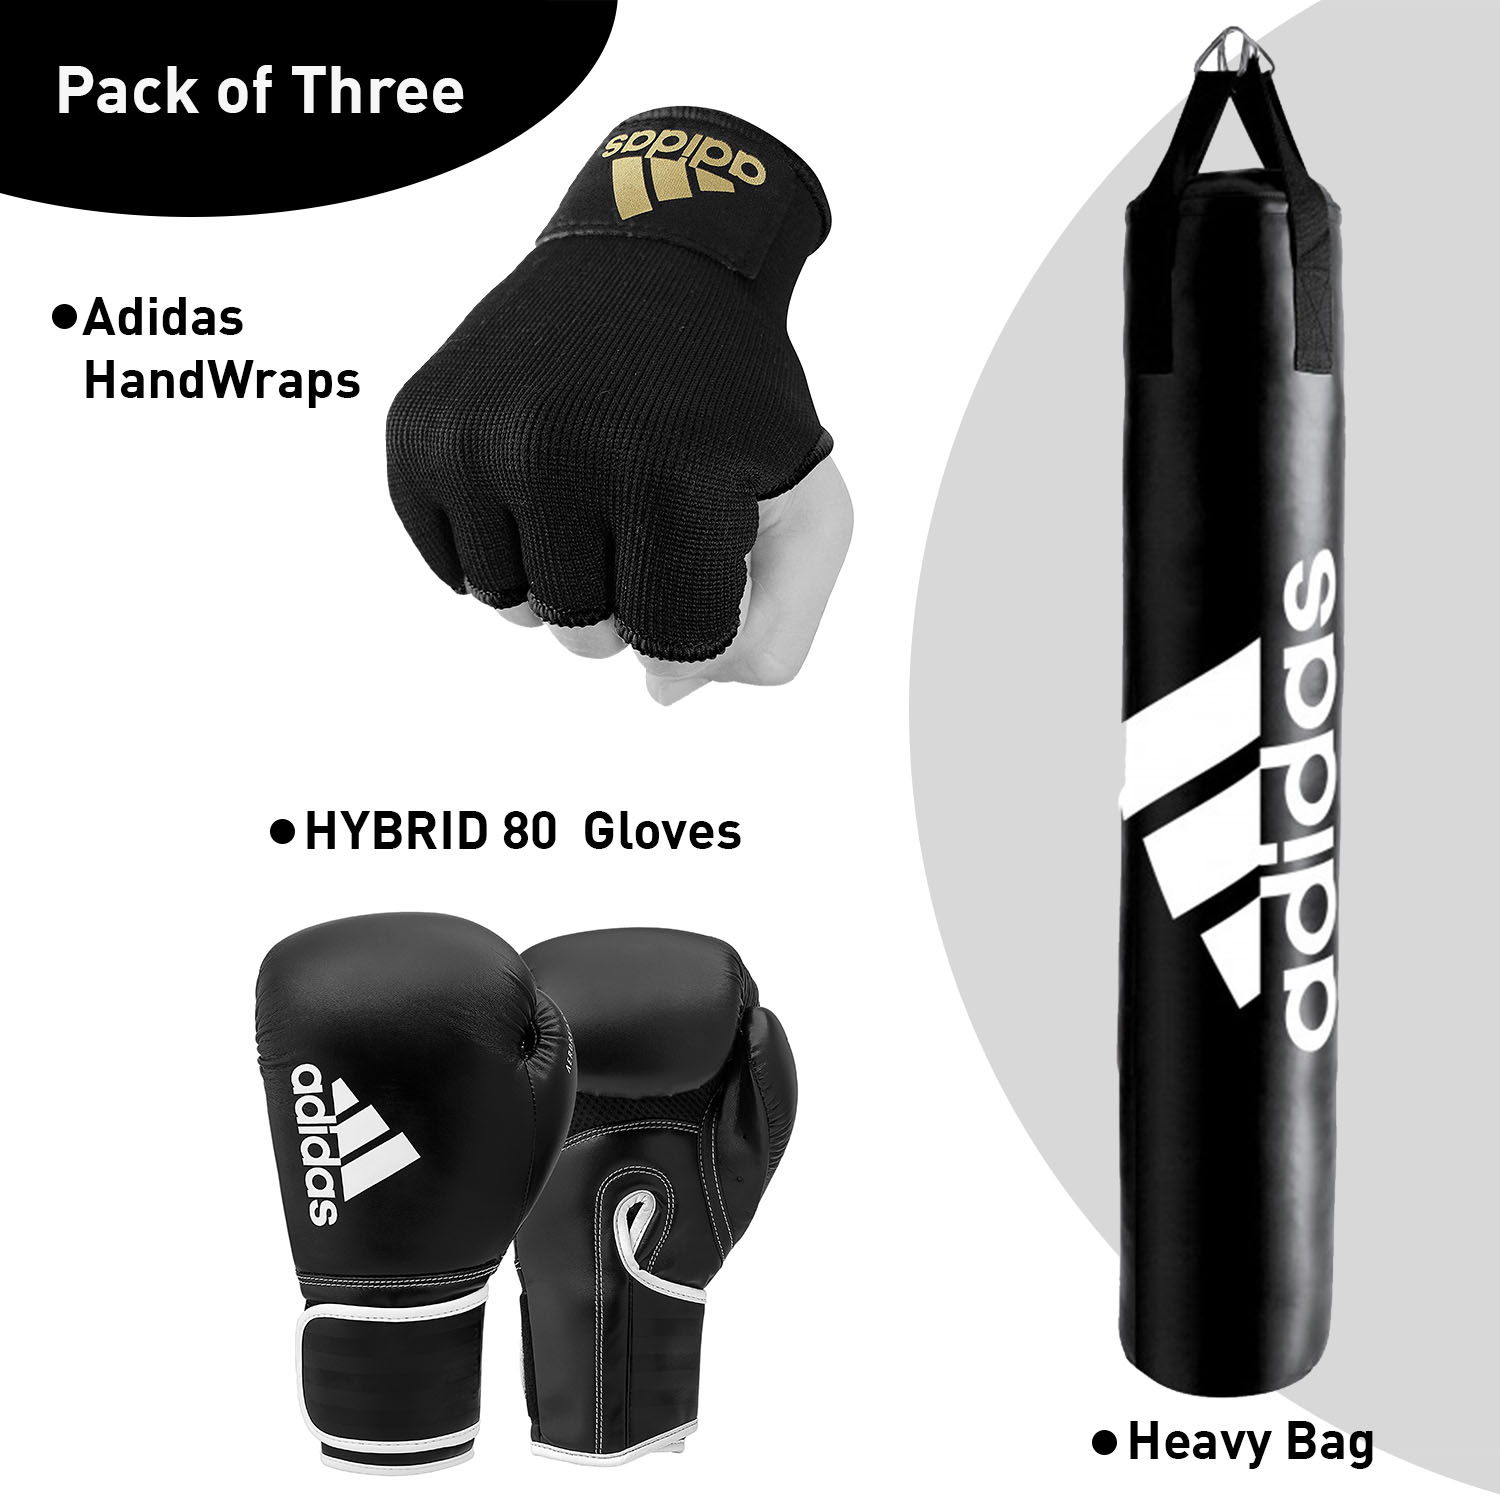 adidas Home bundle deal bag + Hybrid 80 and Inner Gloves